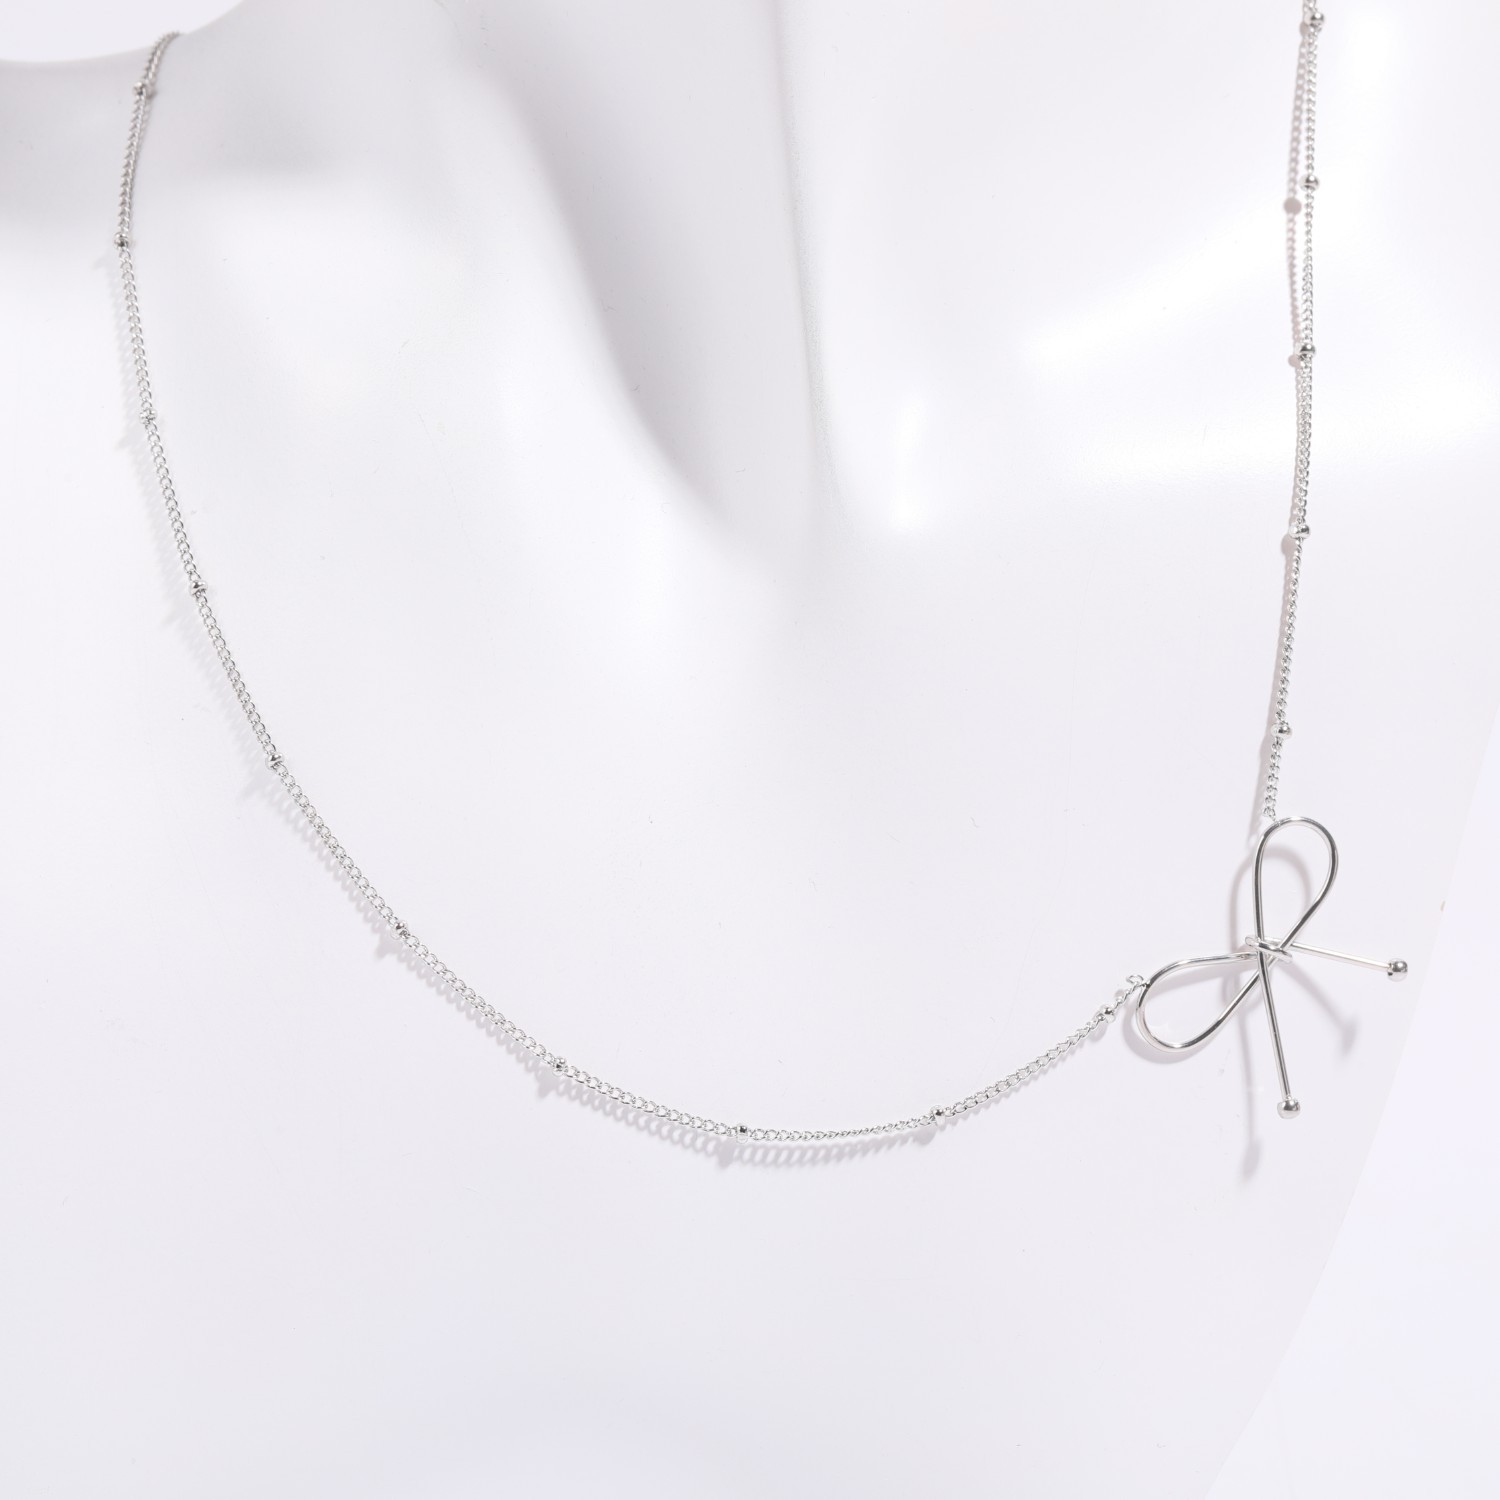 Steel necklace 35x5cm